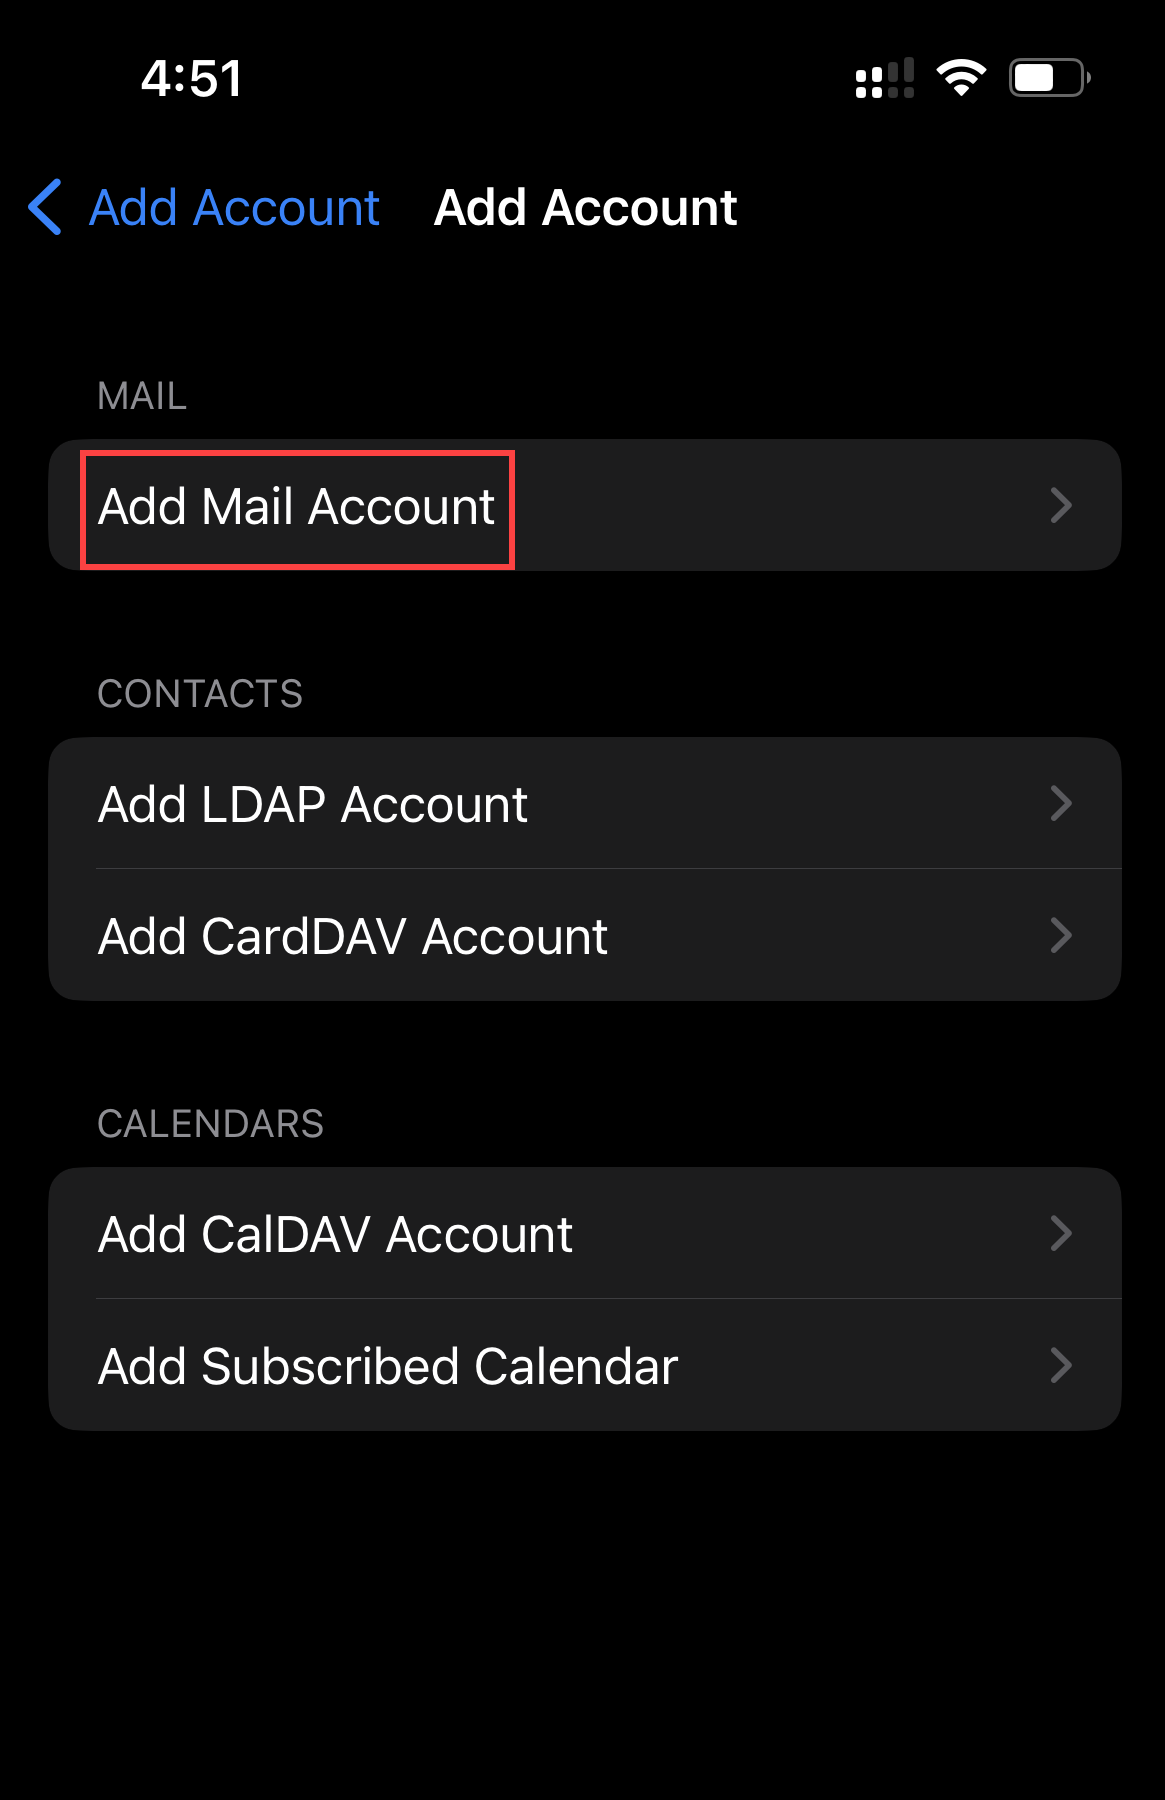 iPhone Mail Client Configuration